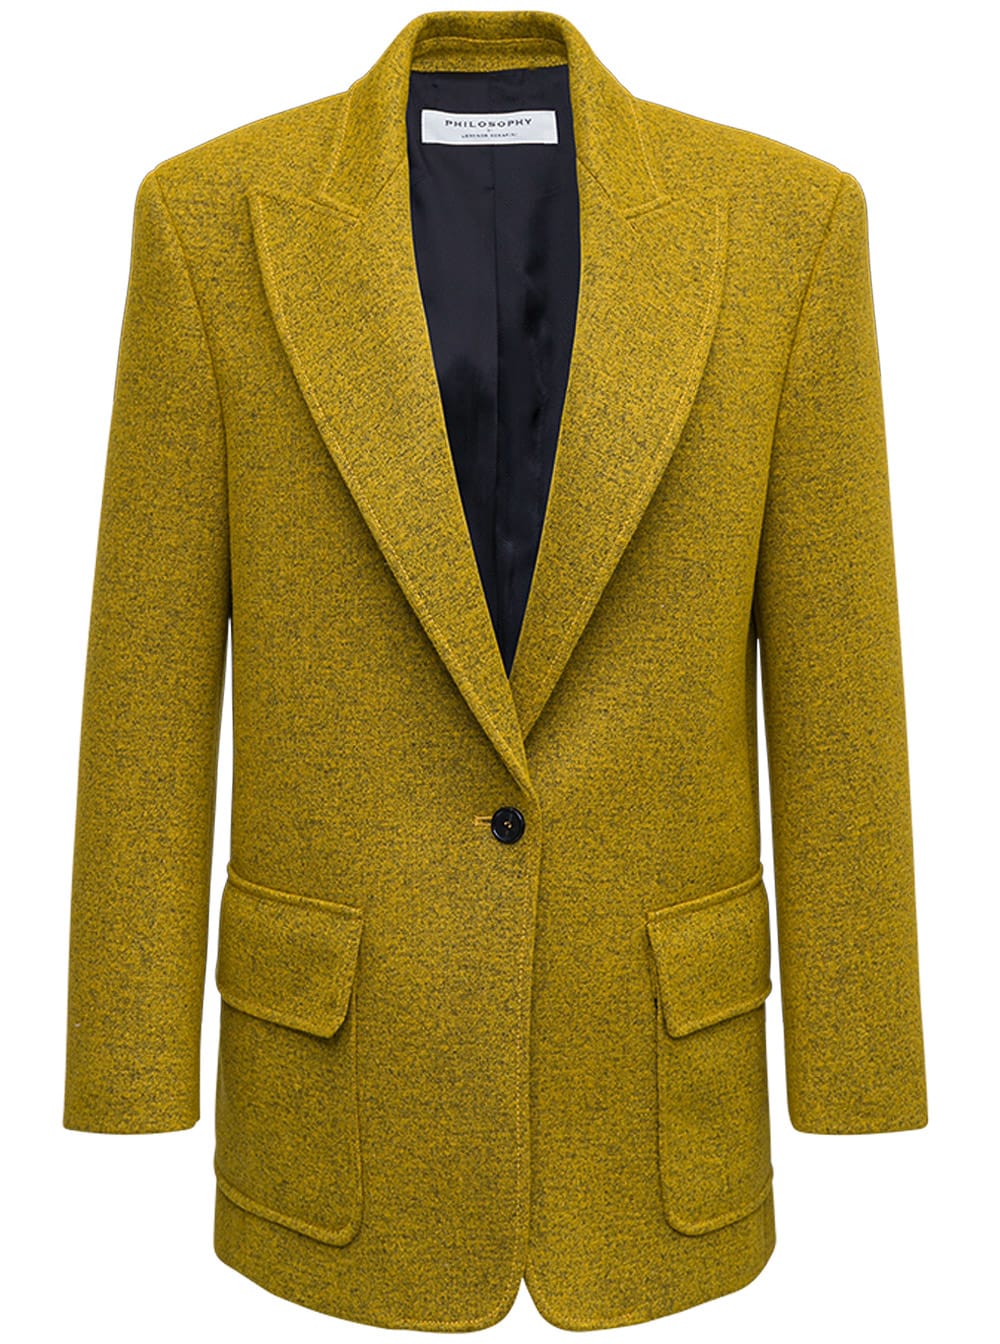 Philosophy di Lorenzo Serafini Mustard-colored Wool Oversize Blazer